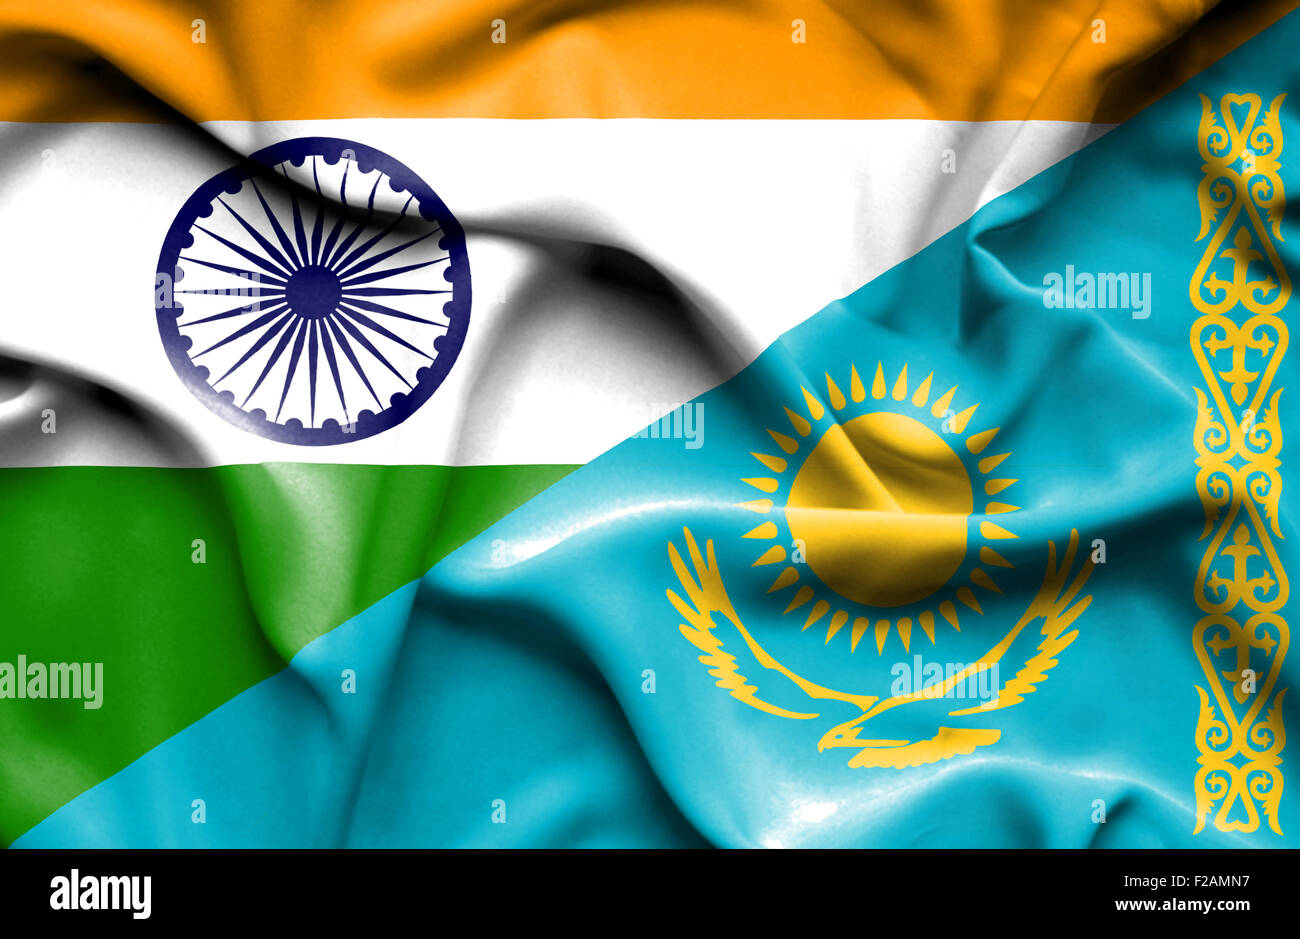 Waving flag of Kazakhstan and Stock Photo